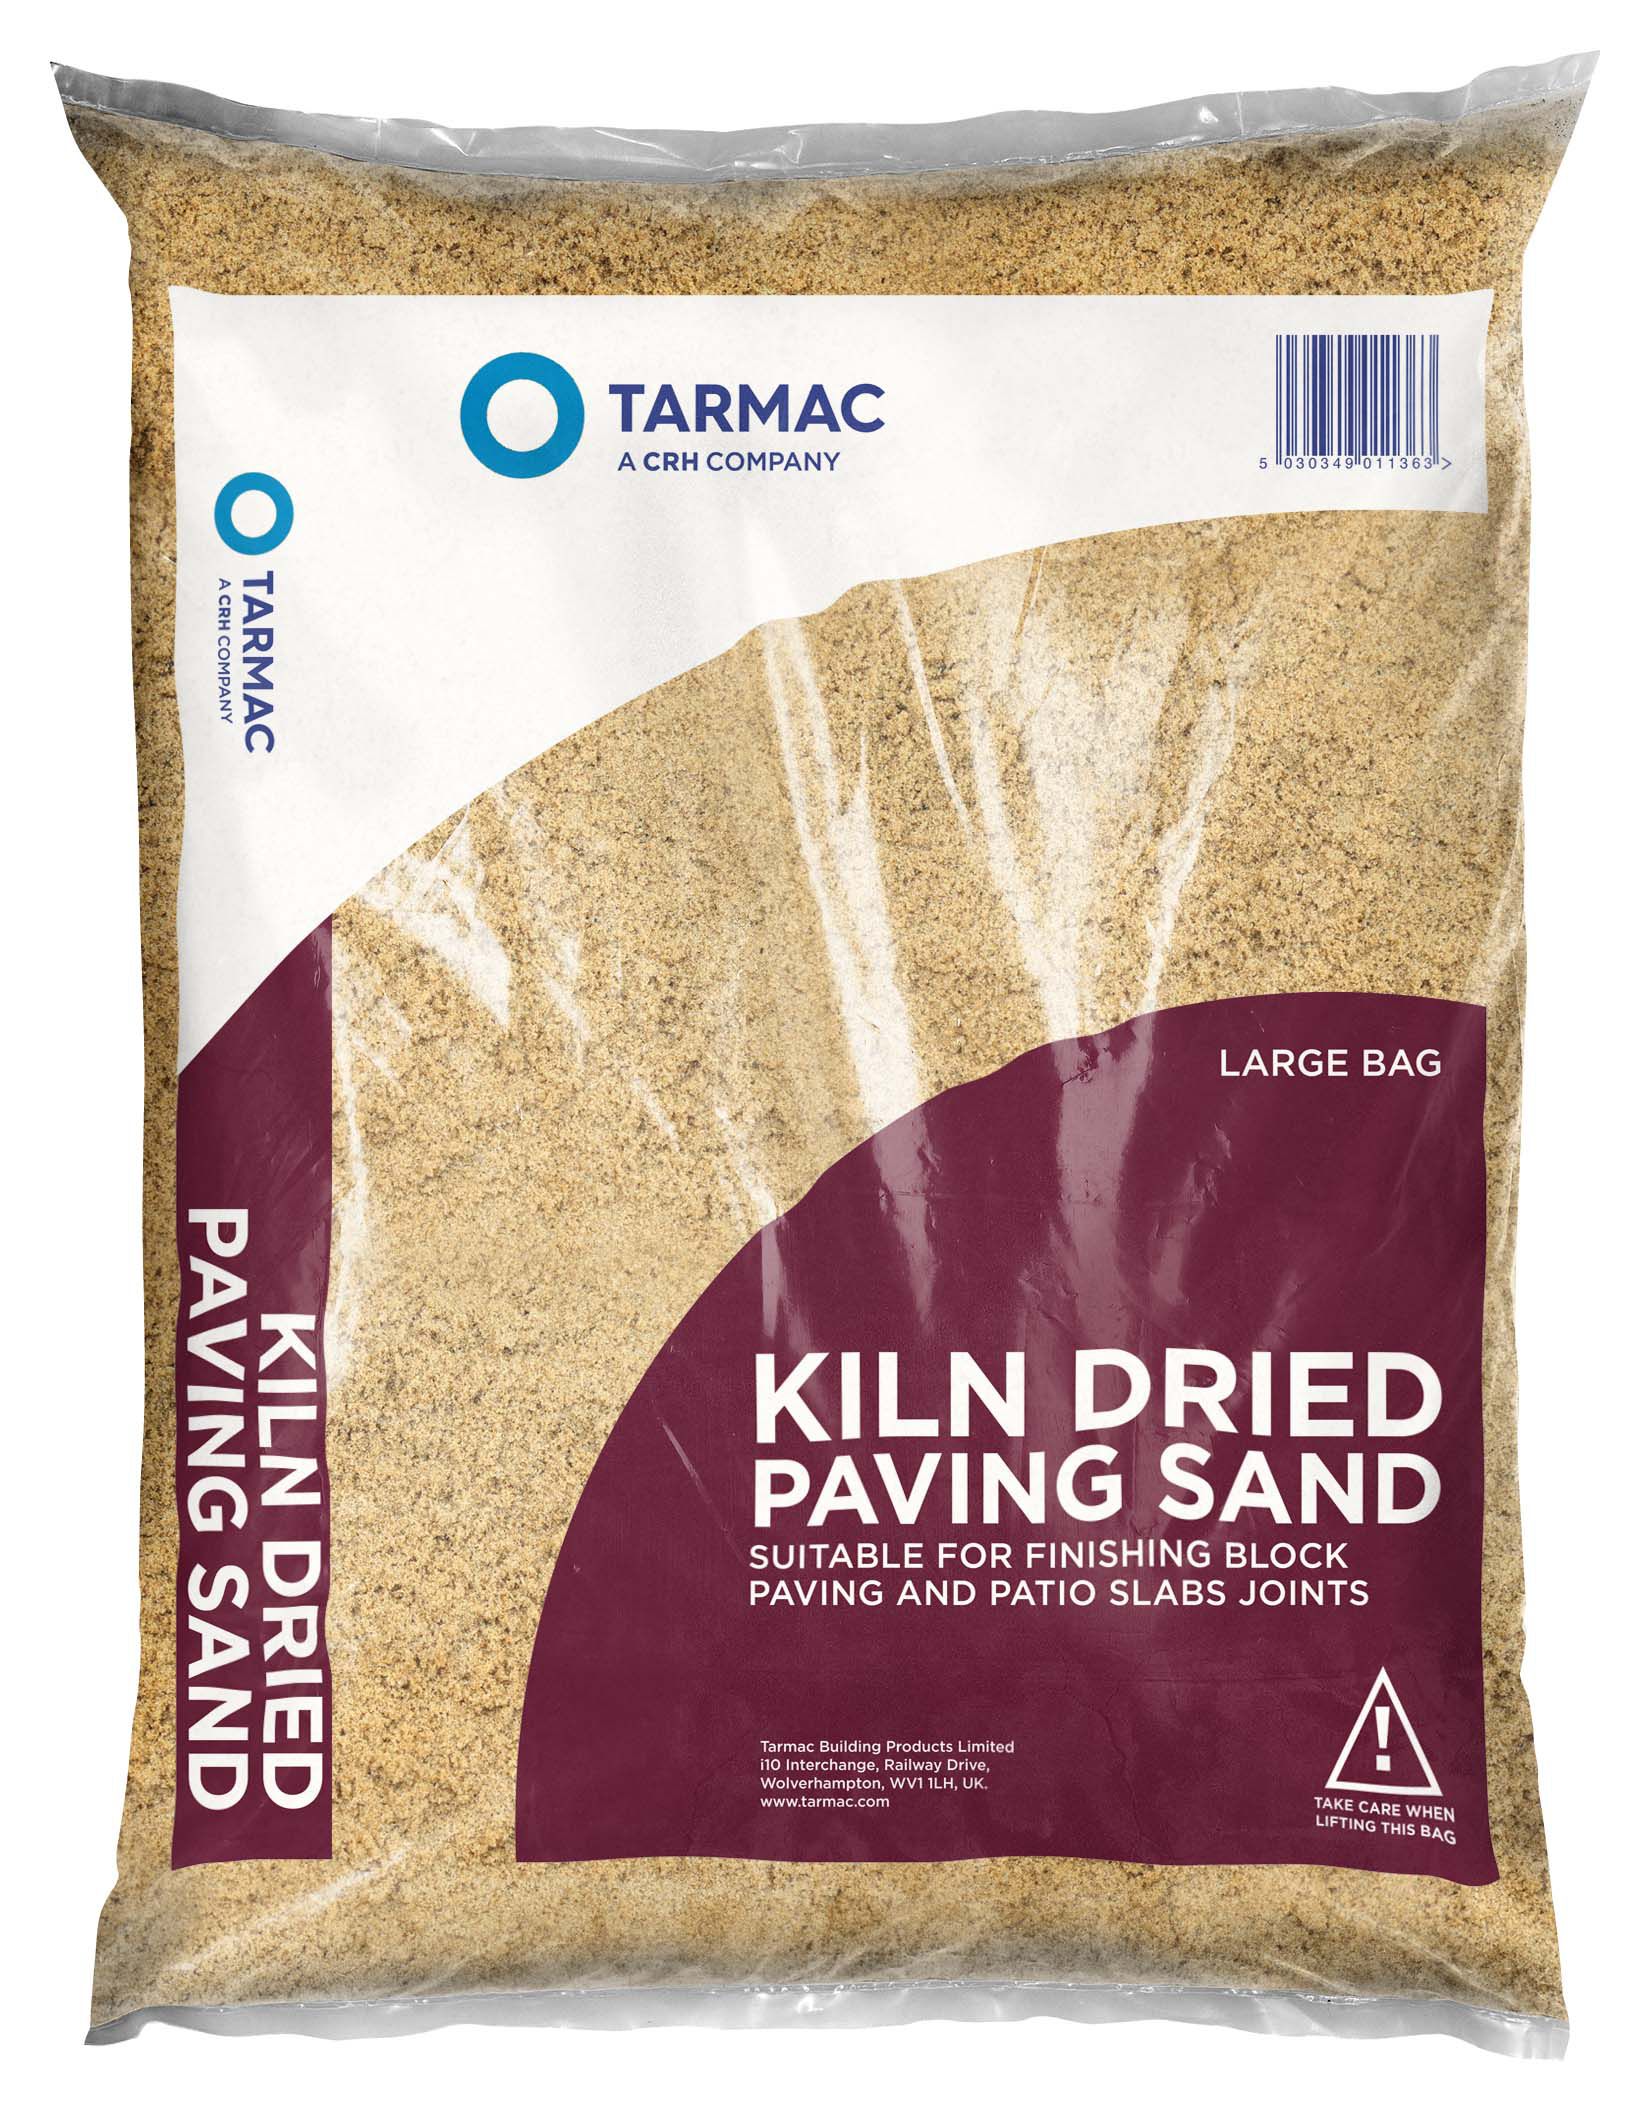 Image of Tarmac Kiln Dried Paving Sand - Large Bag